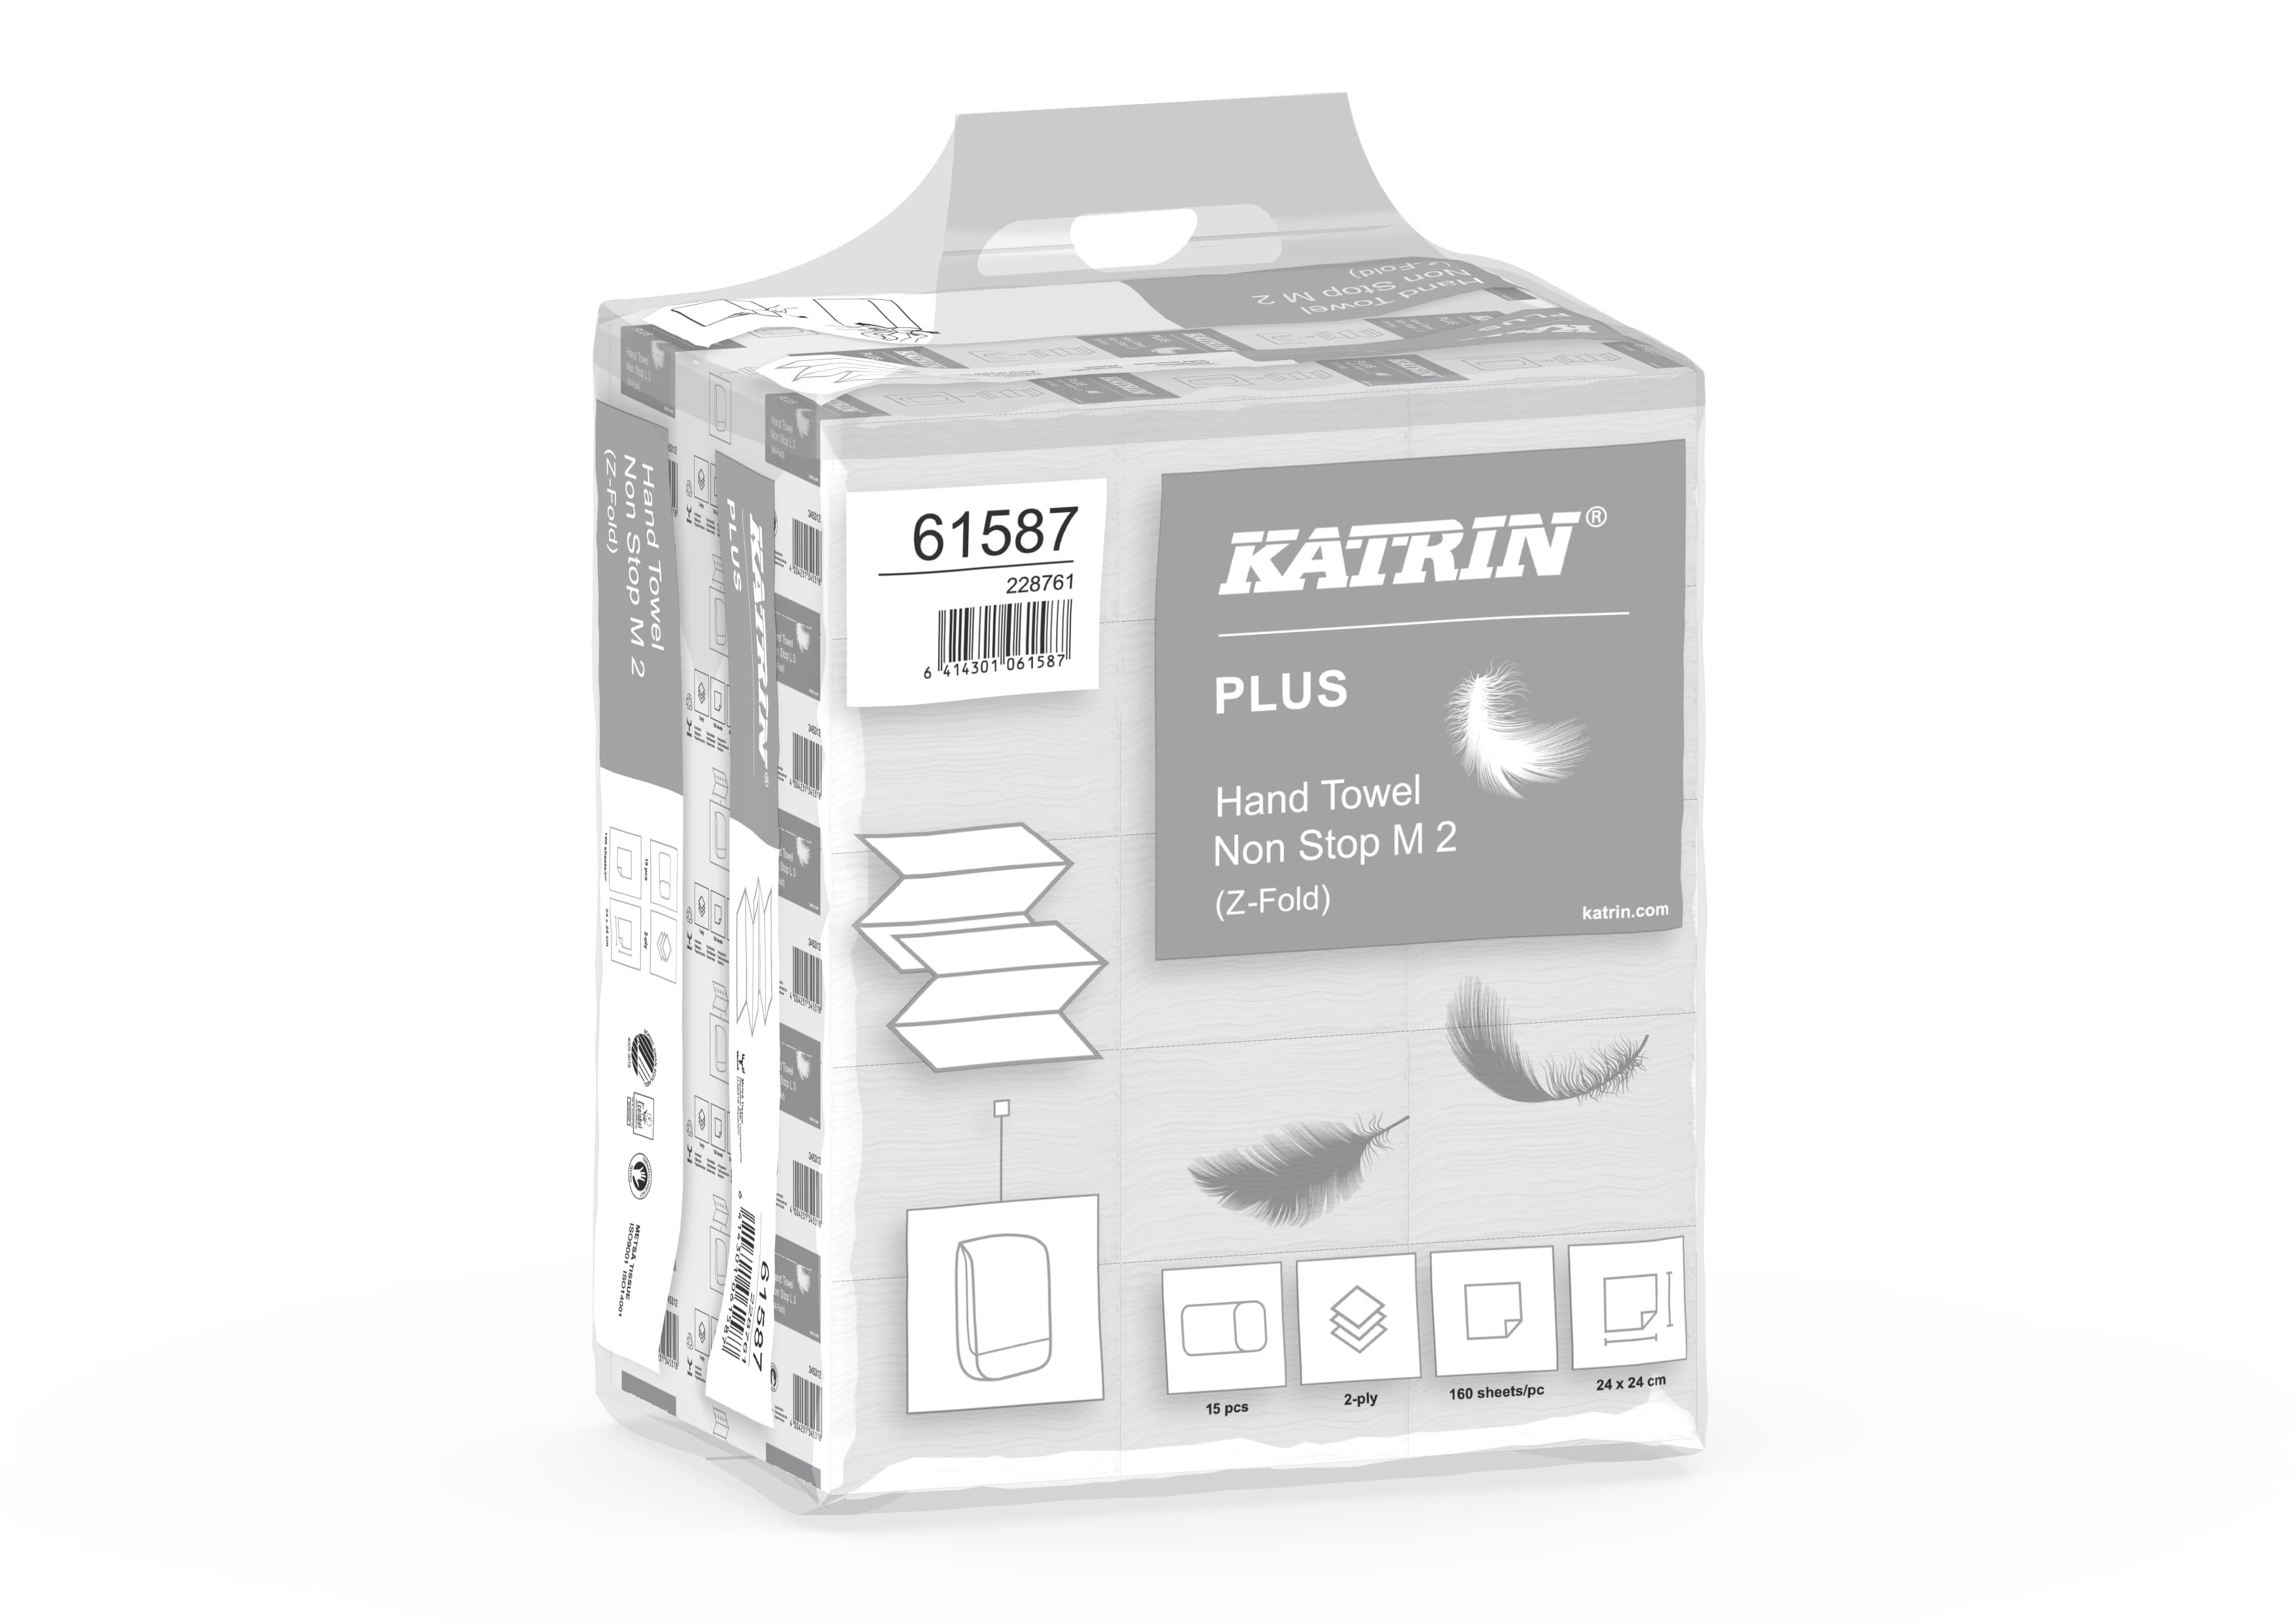 Katrin Plus Non Stop M2 15 x 160 (2400)sheets